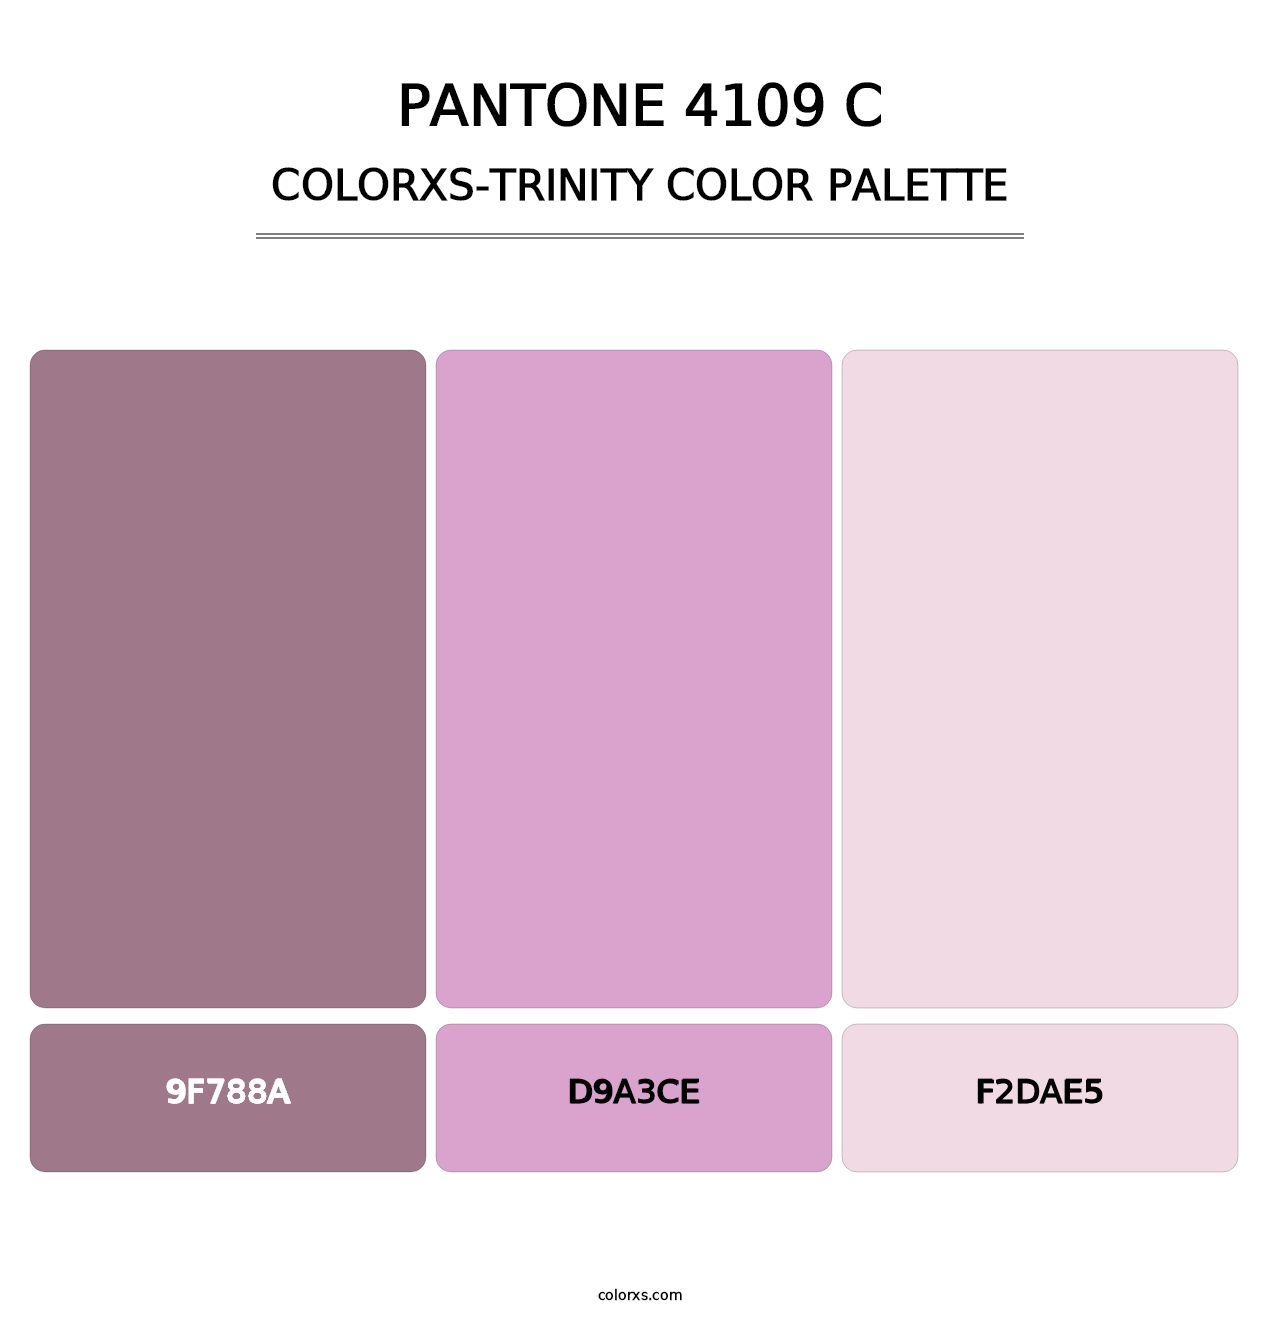 PANTONE 4109 C - Colorxs Trinity Palette